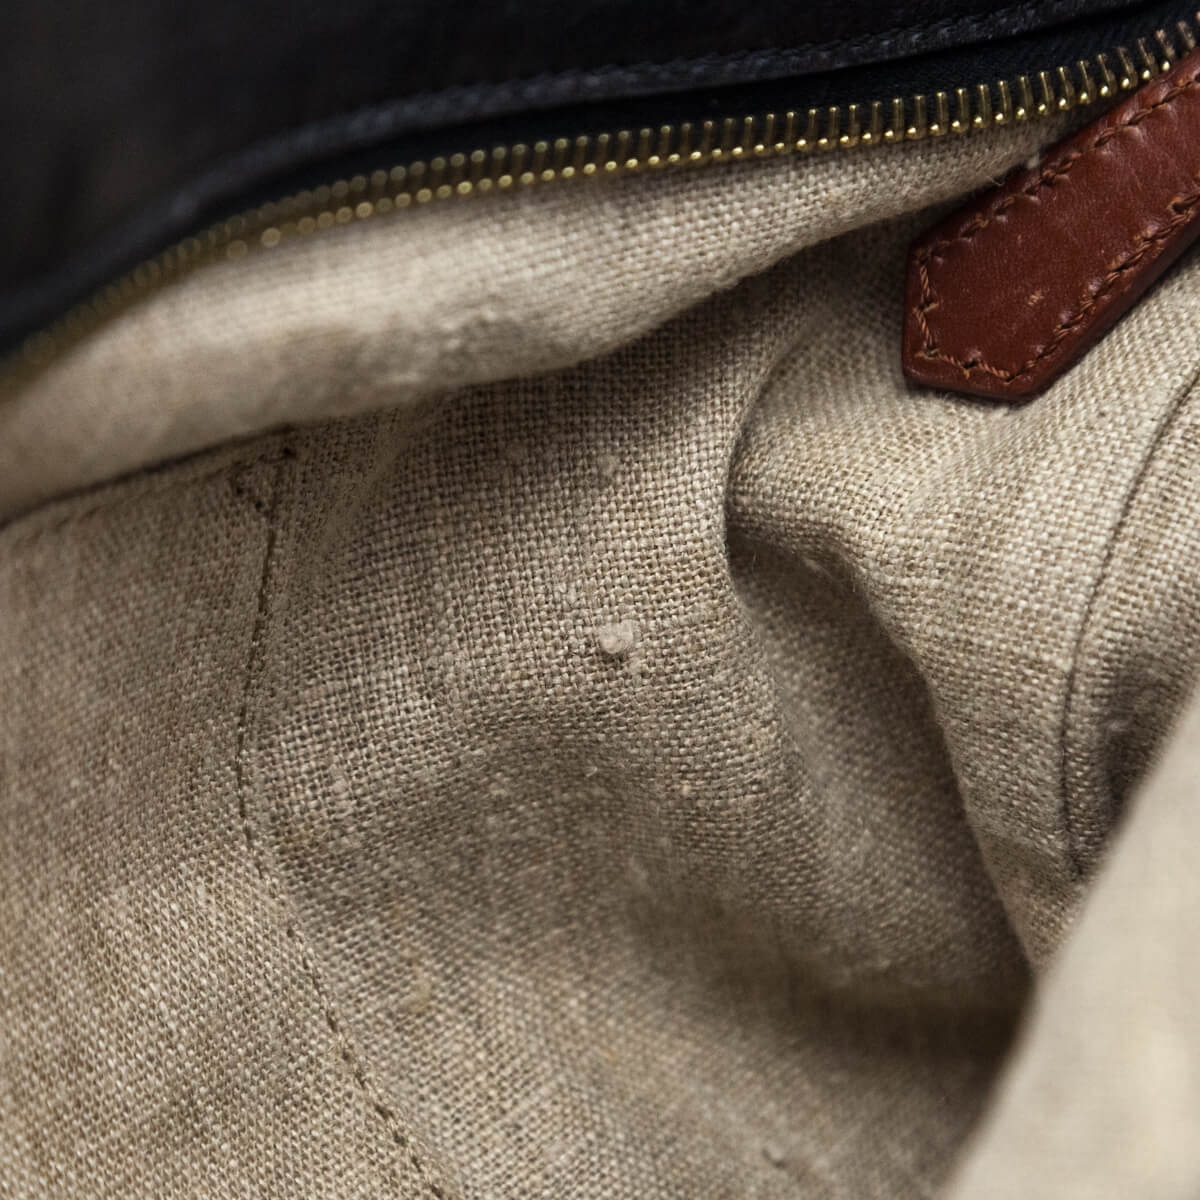 Fendi Tobacco Pequin Striped Vitello Tote - Love that Bag etc - Preowned Authentic Designer Handbags & Preloved Fashions